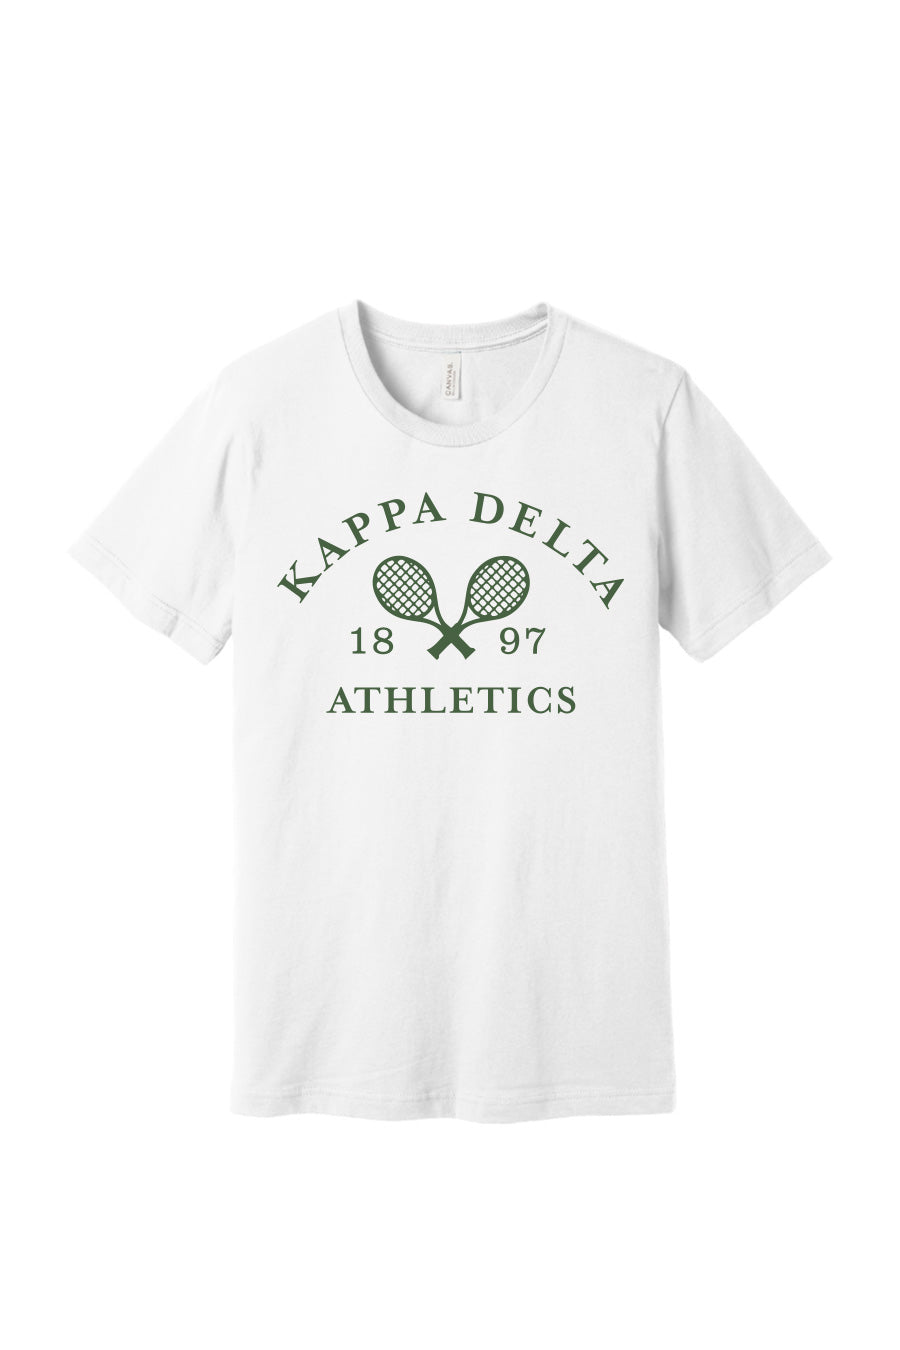 Load image into Gallery viewer, Madi Kappa Delta Athletics Tee
